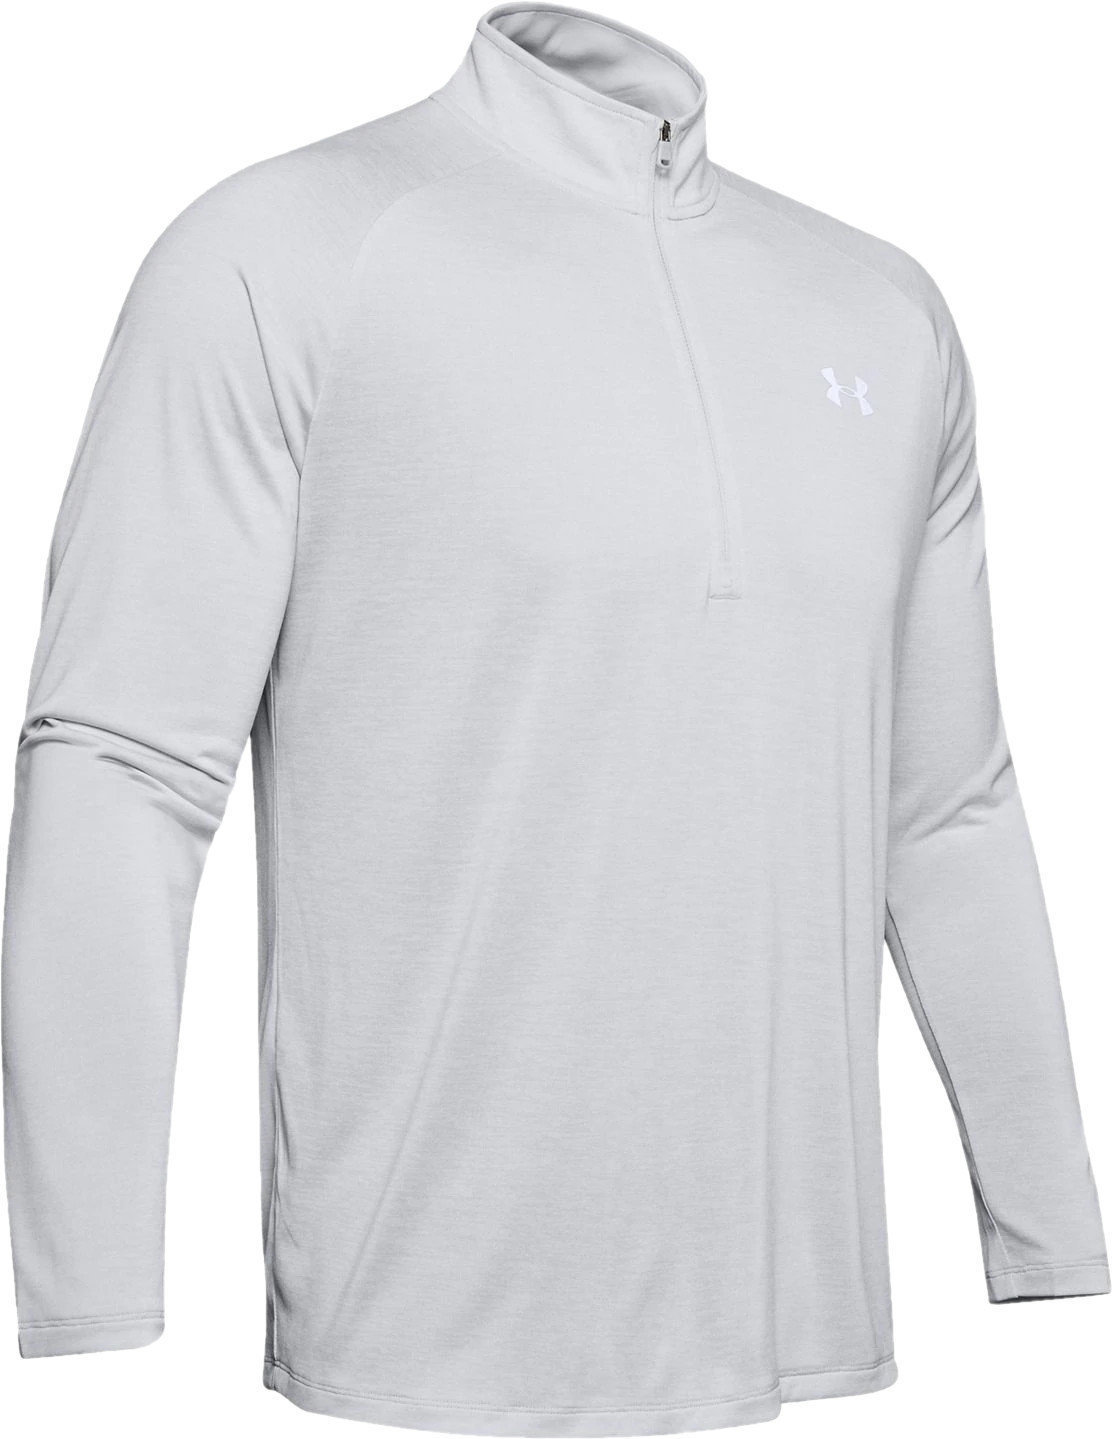 Hoodie/Sweater Under Armour Men's UA Tech 2.0 1/2 Zip Long Sleeve Halo Gray S